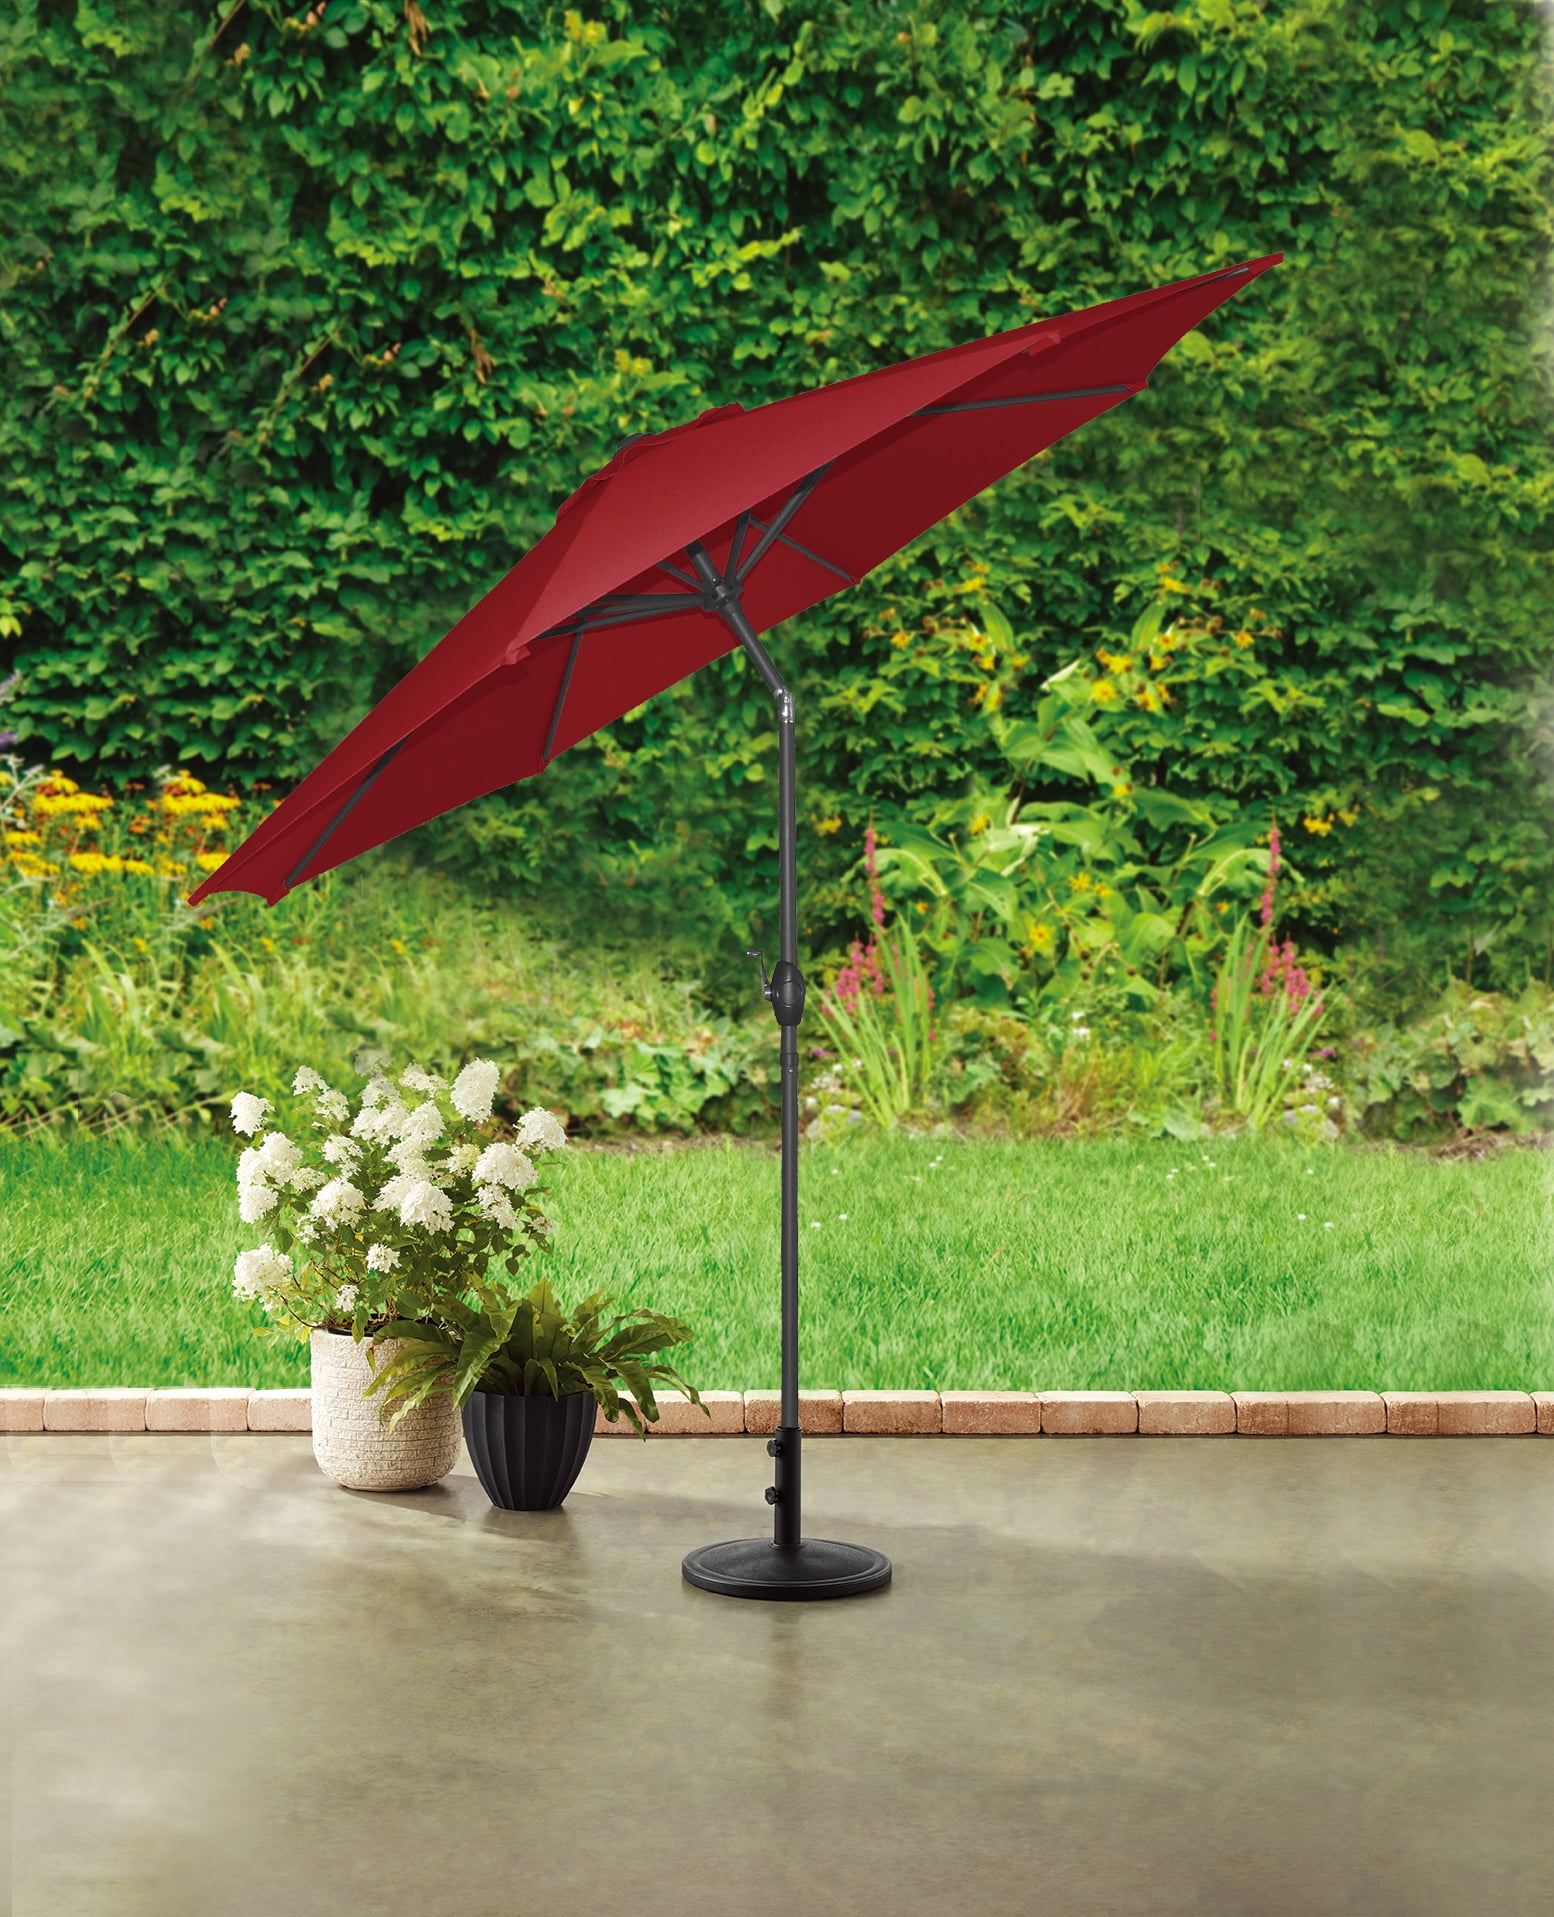 Better Homes & Gardens 9' Premium Patio Umbrella, Red